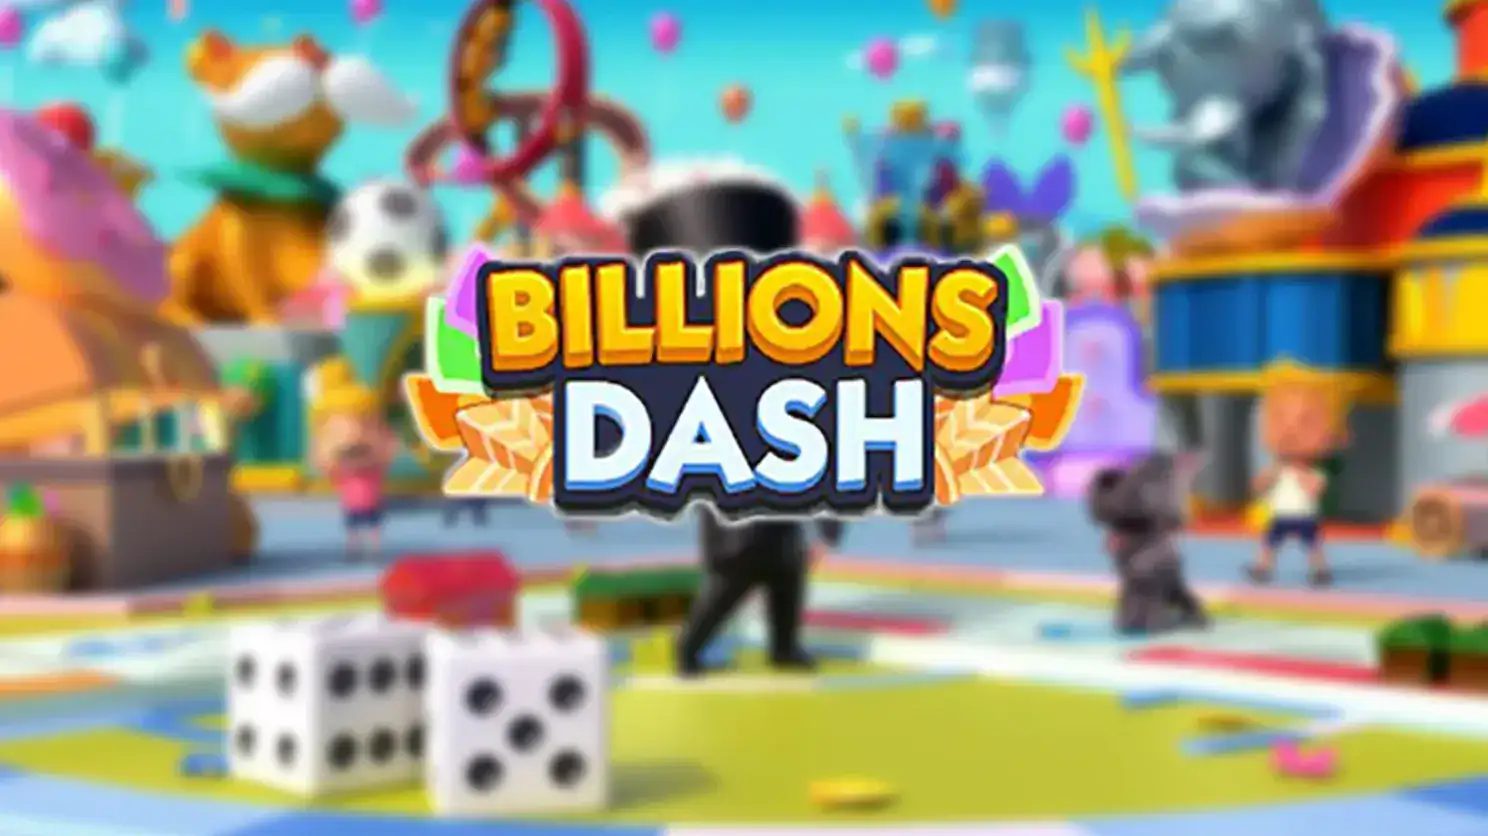 monopoly go billions dash rewards and milestones